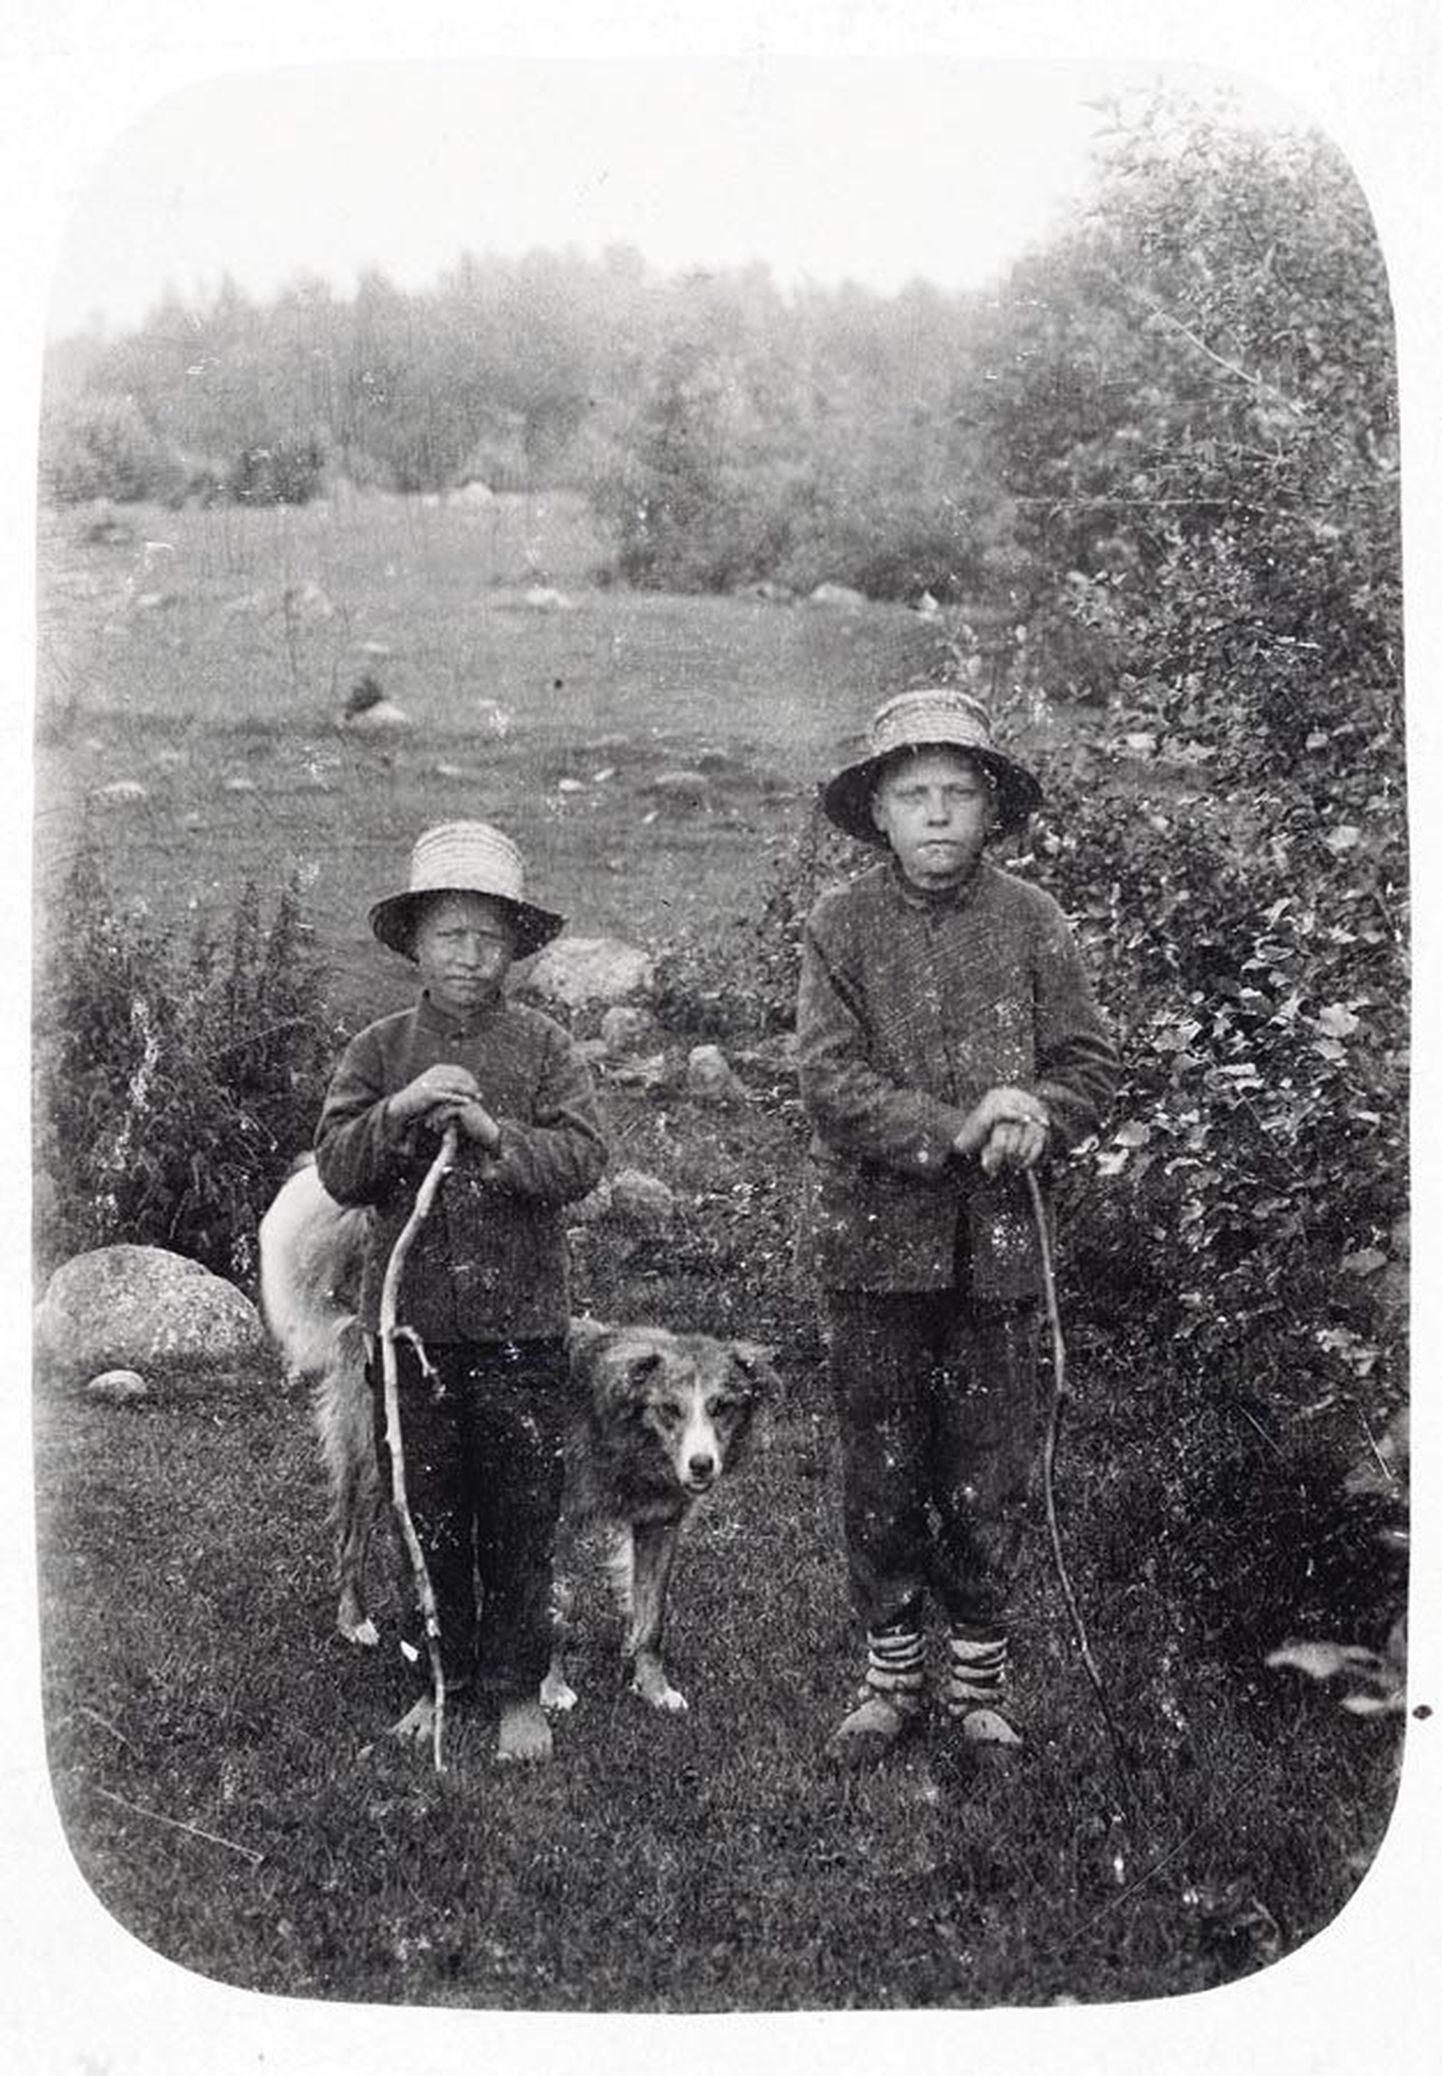 Kaks karjast karjamaal. 1912.
Pseudonüüm Ambu-Pambu 25